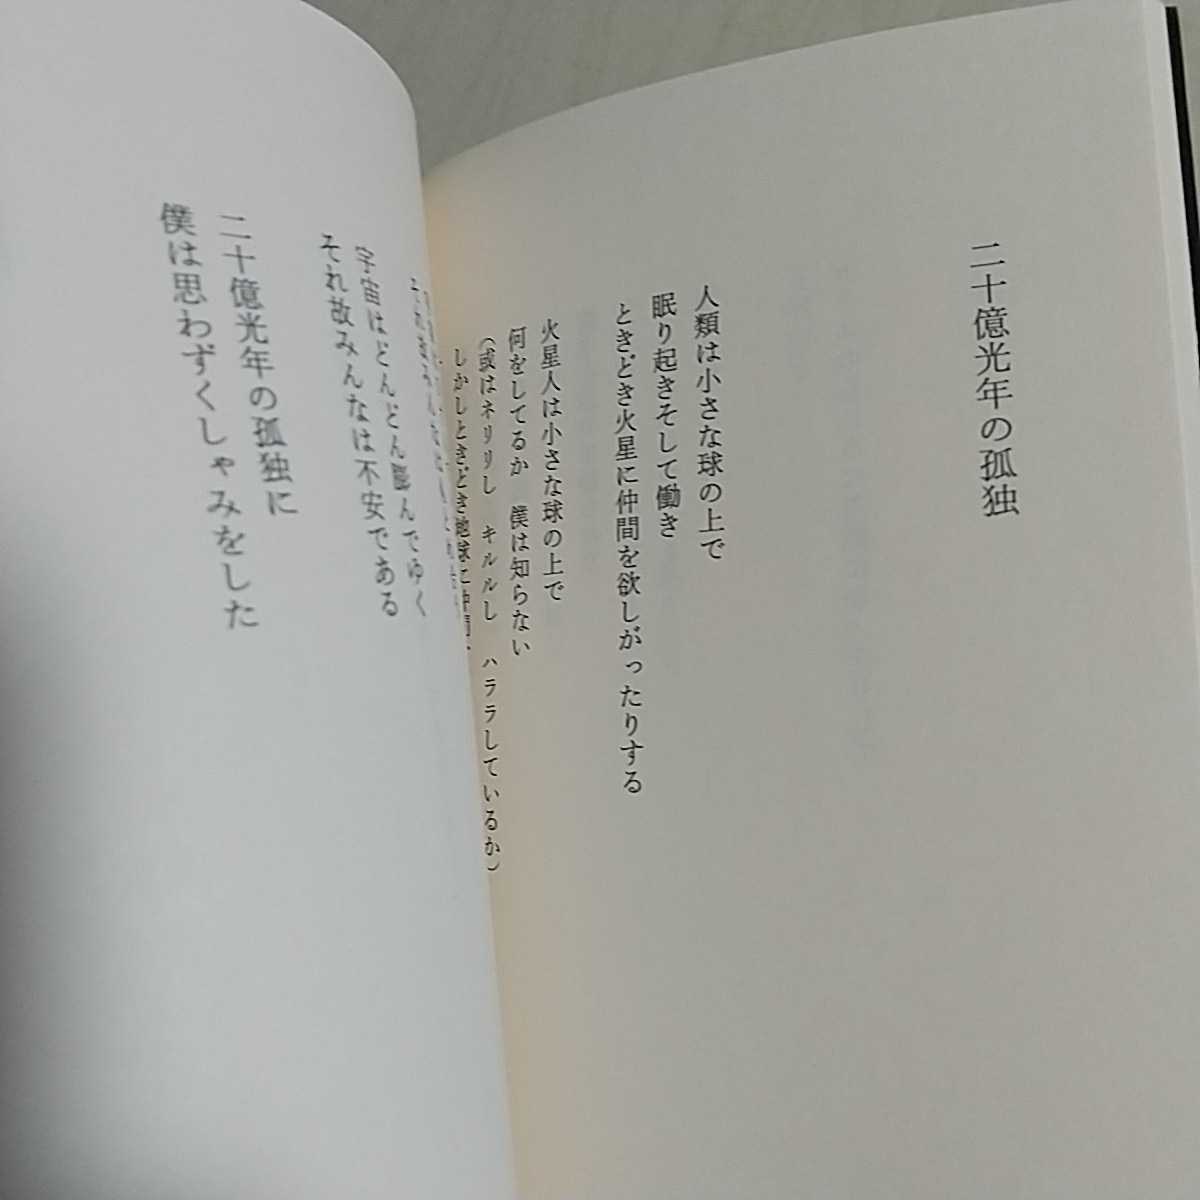  Tanikawa Shuntaro библиотека 4 шт. комплект 2 10 сто миллионов свет год. ....... это мой super ... Tanikawa Shuntaro . выбор сборник 1 Shueisha Bunko б/у 